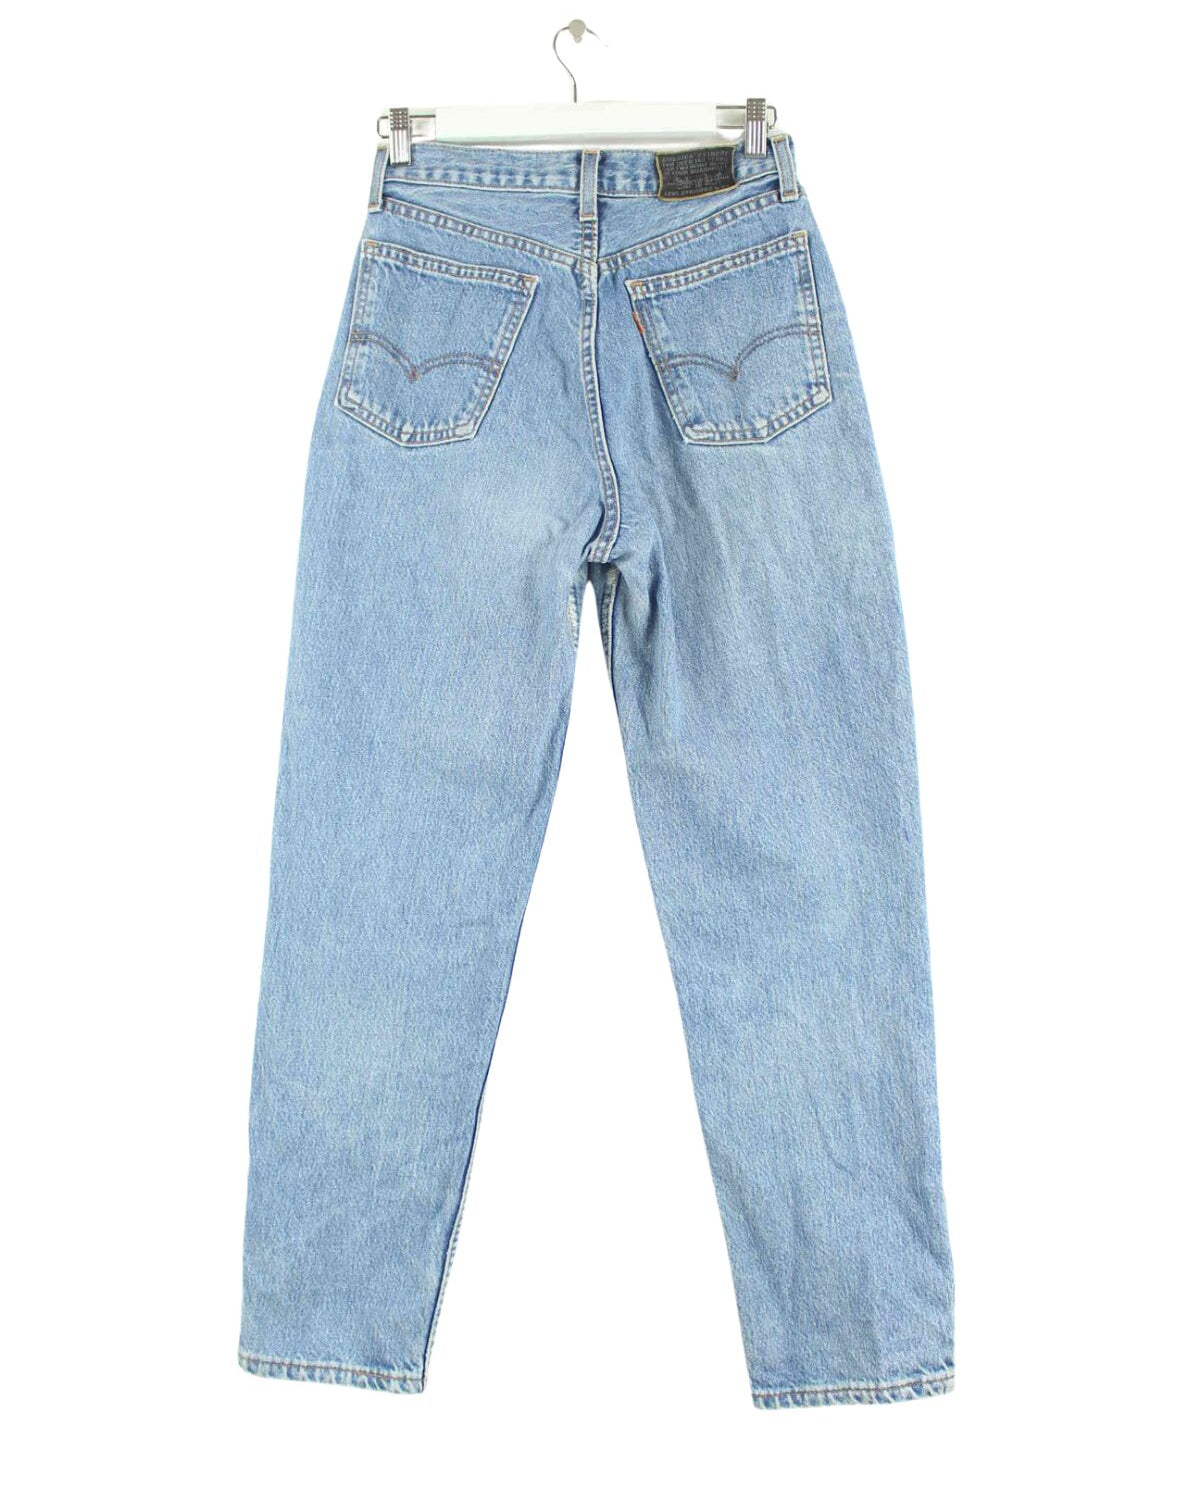 Levi's Damen 1993 Vintage 216 Orange Tab Jeans Blau W26 L30 (back image)